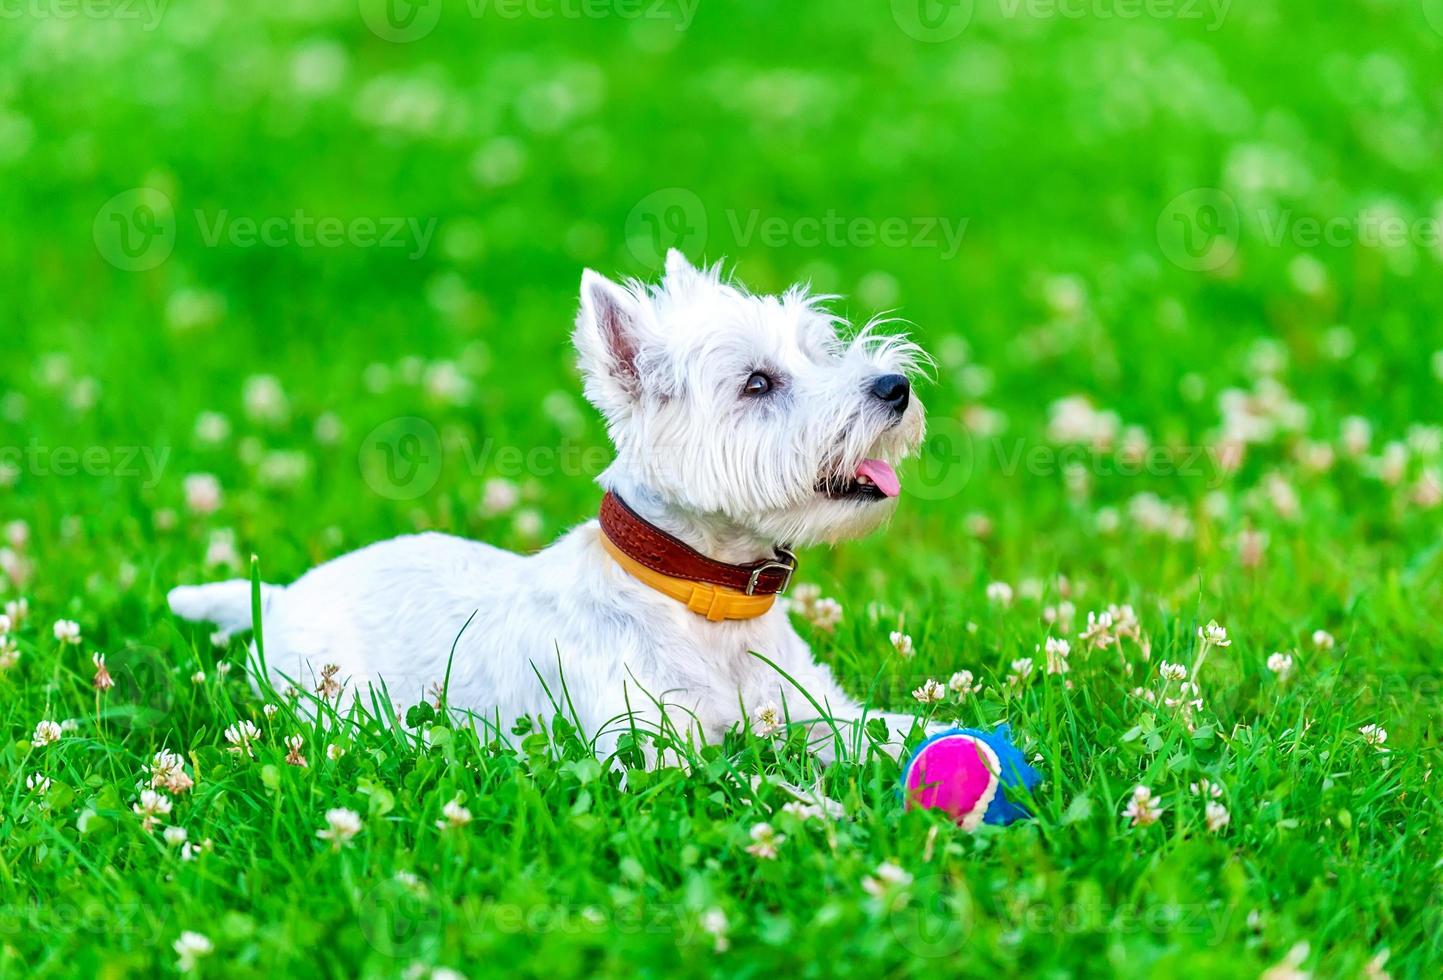 atencioso west highland white terrier com bola cachorro brinquedo foto